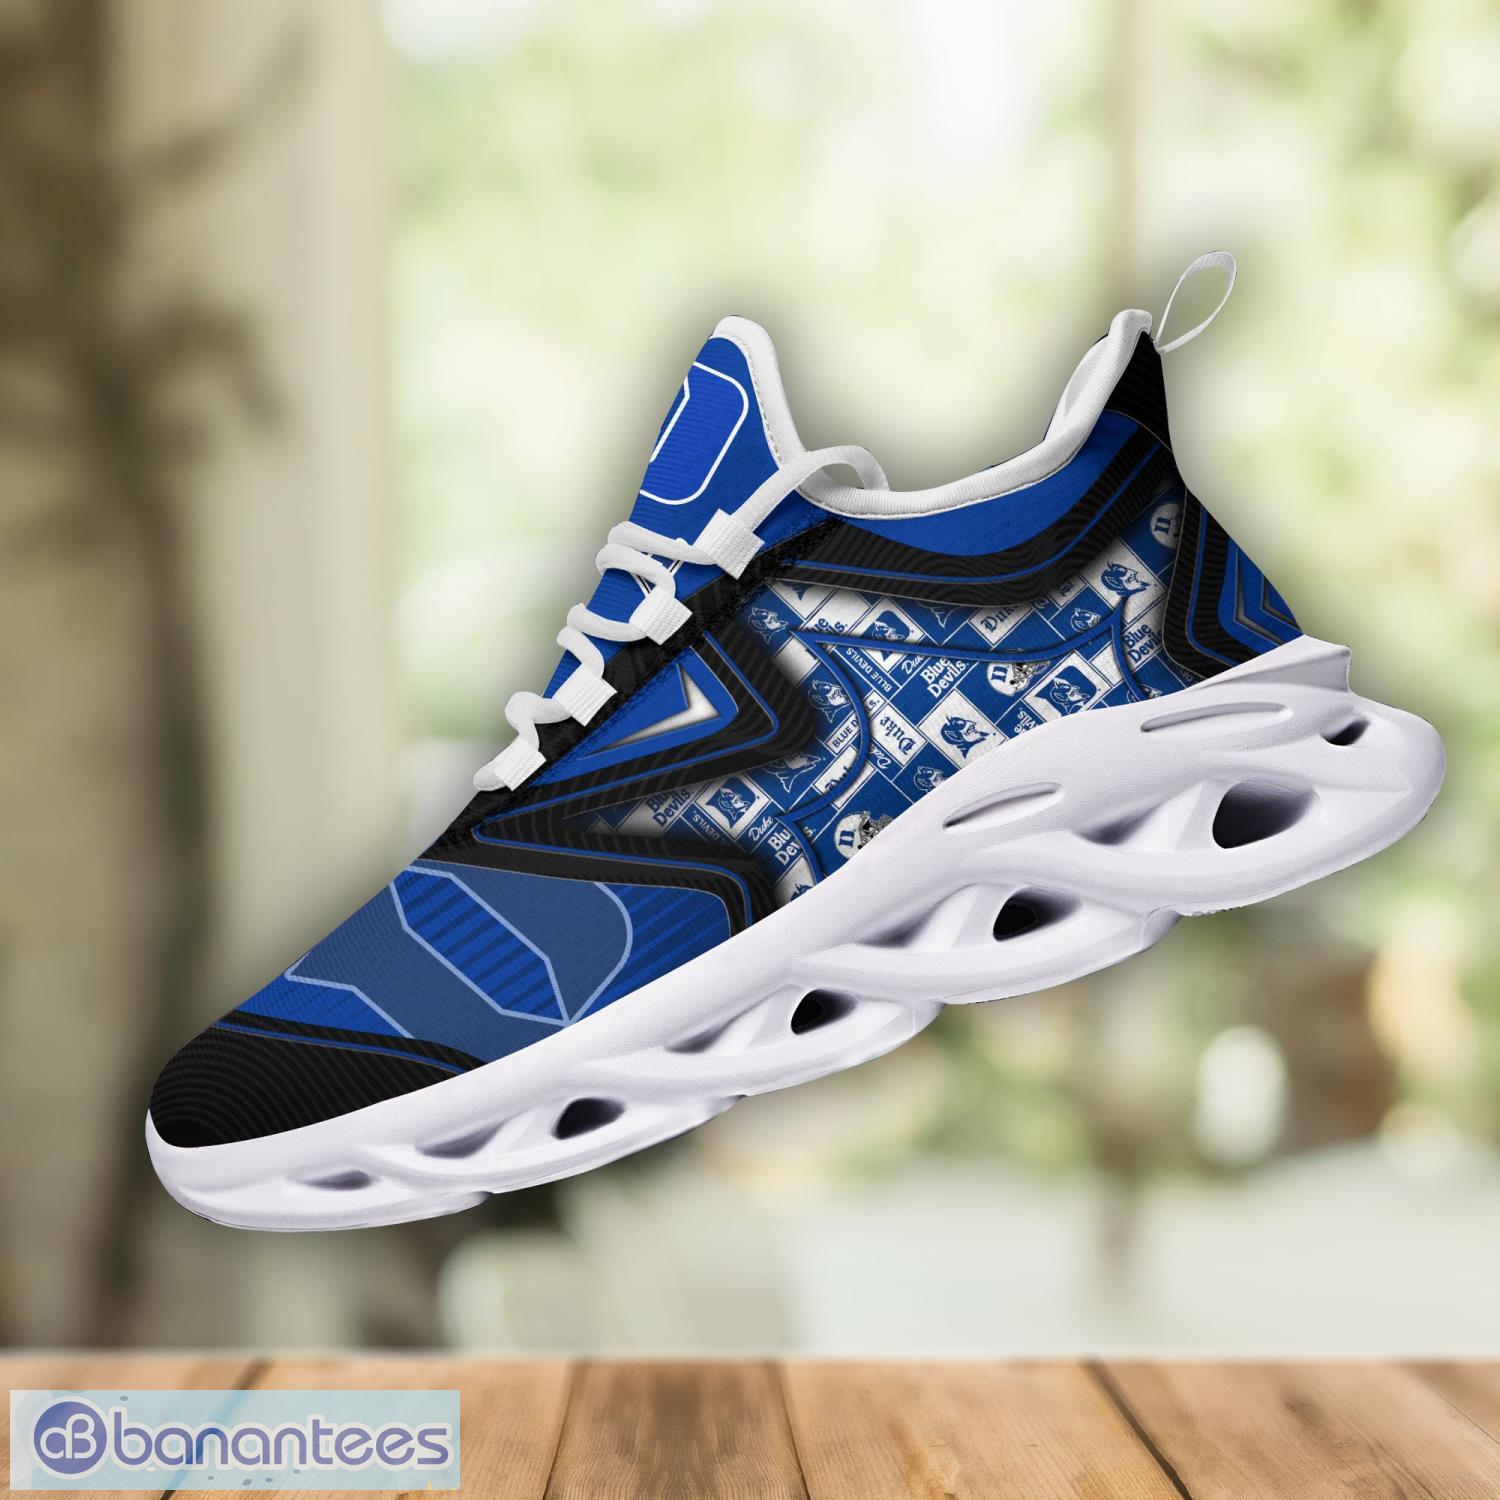 Duke Men Sports Shoes (FWOL1481)